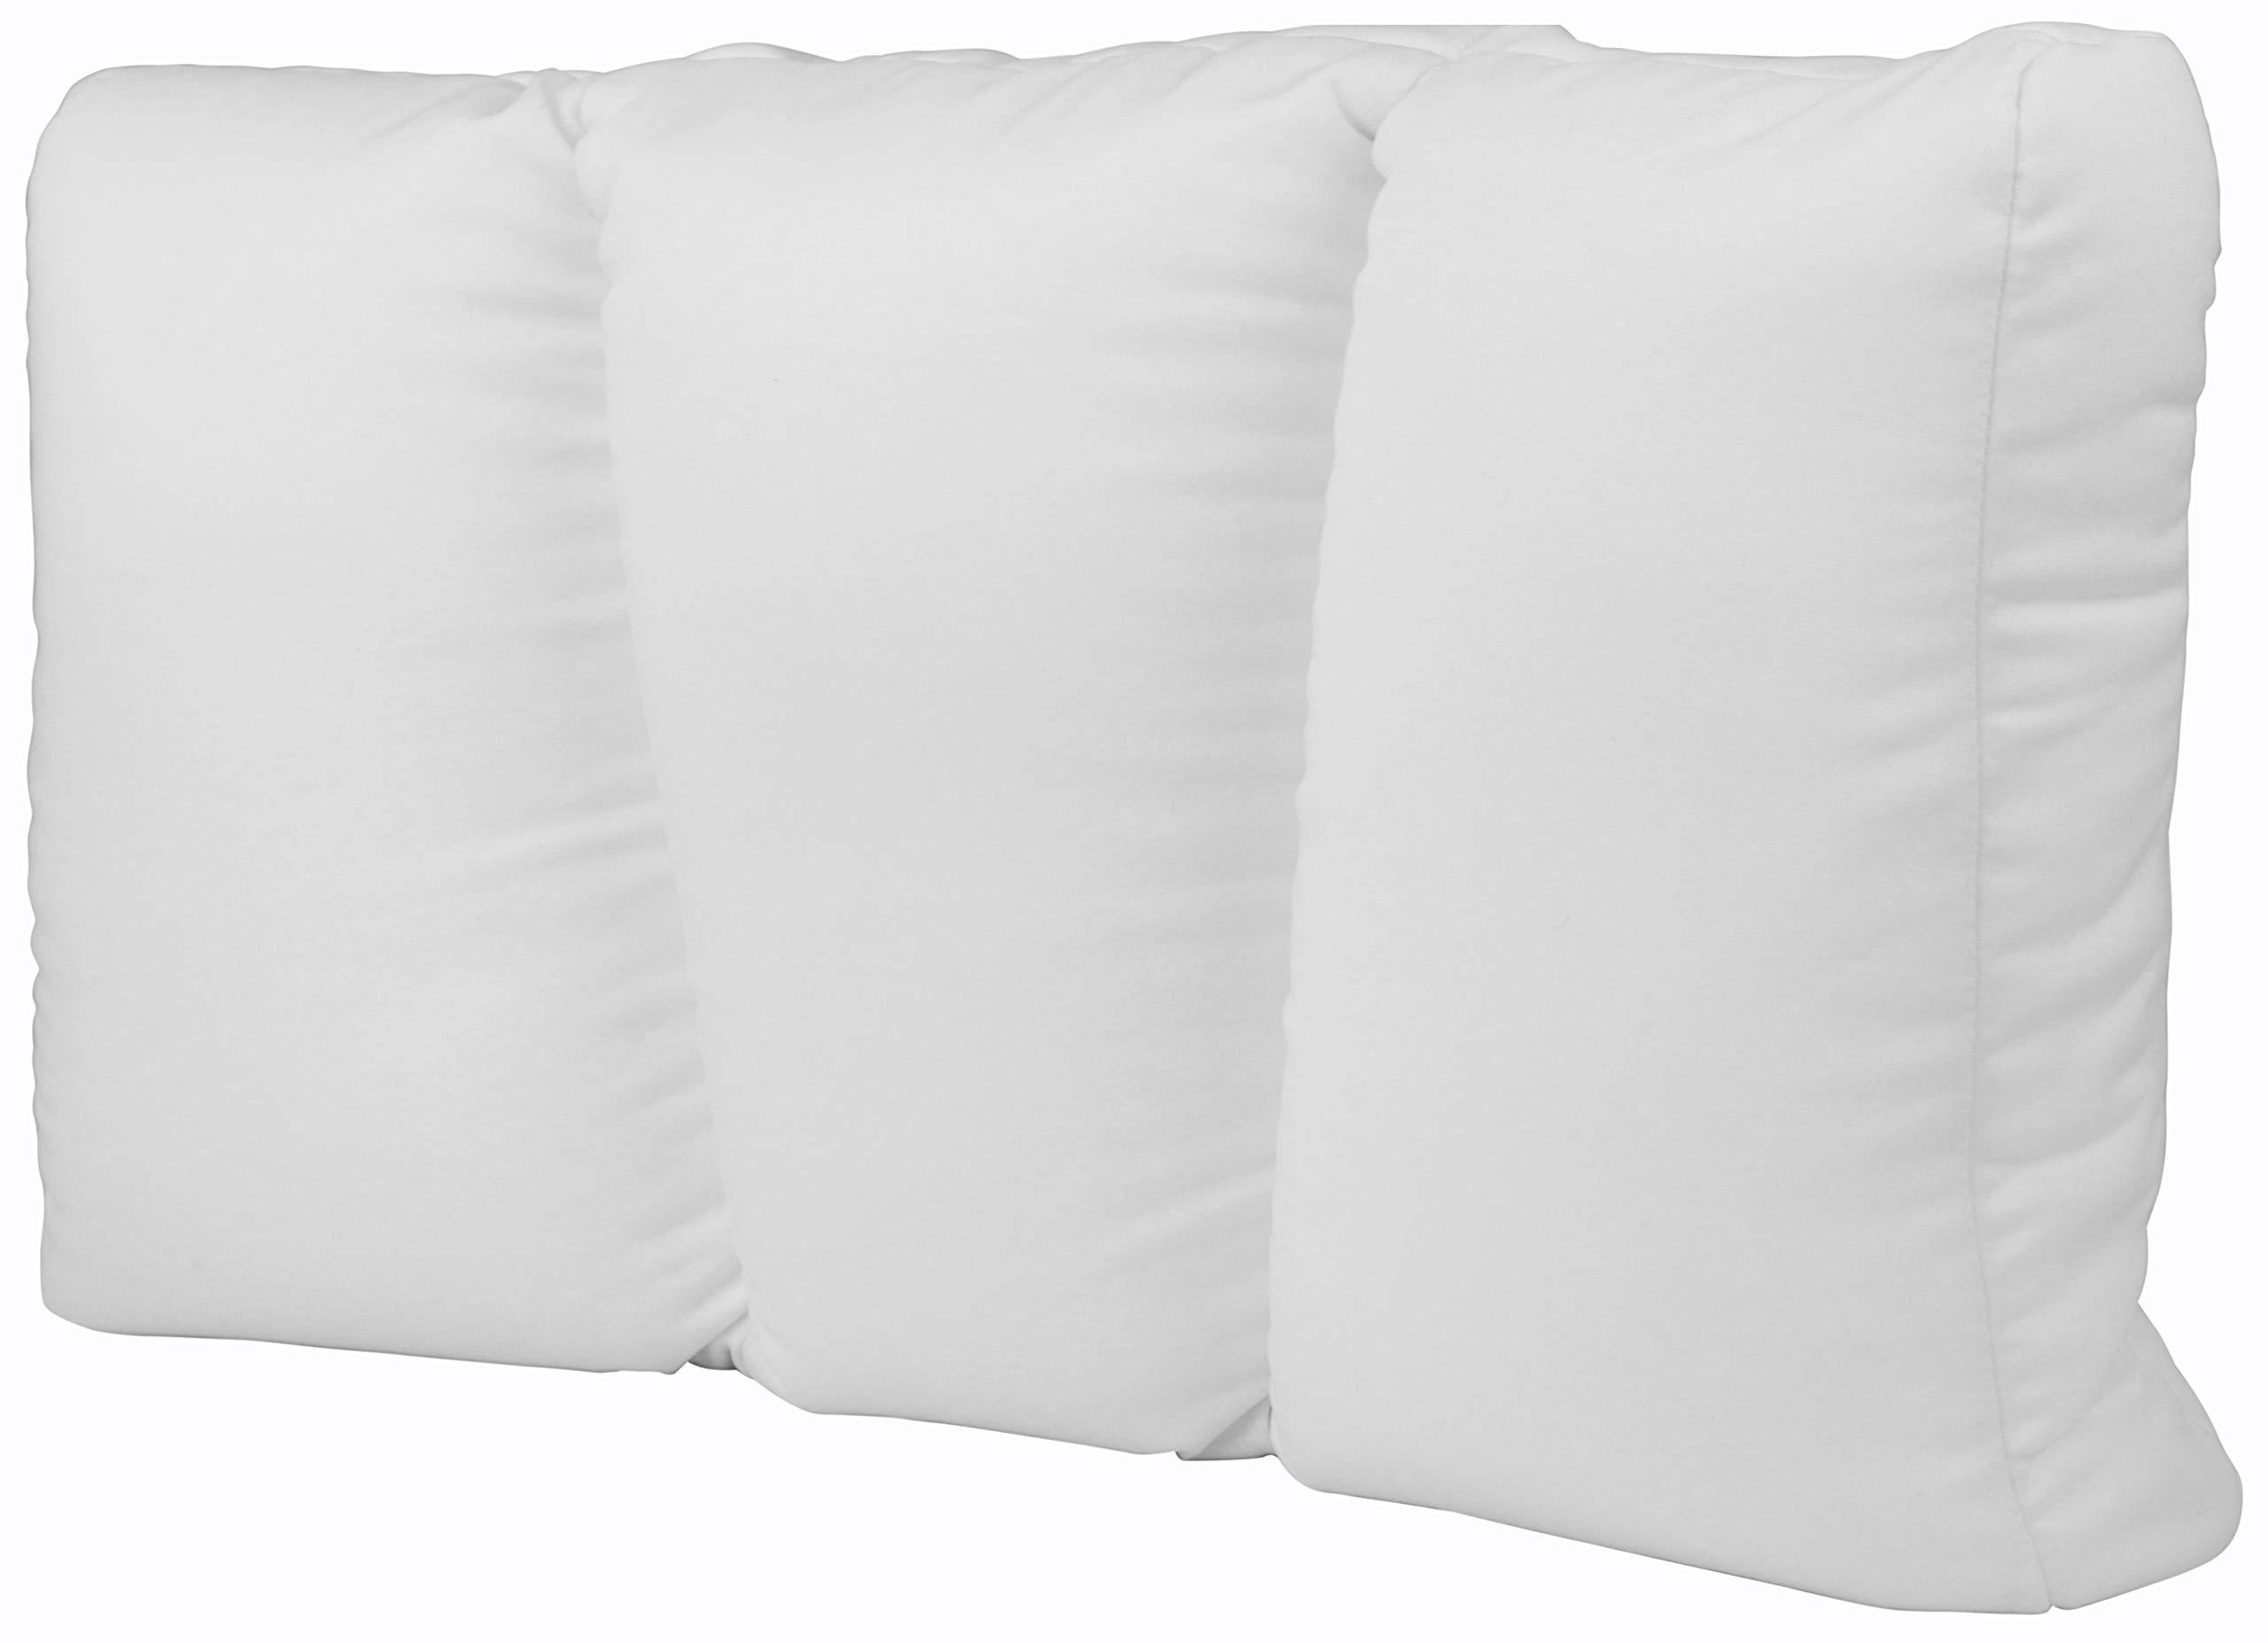 Deluxe Comfort Microbead Cloud Pillow - Small (18.5" X 12.5" X 4") = Cm= 47 Width X 31 Deep X 10.16 Height - Microbead Pillow - Sobakawa Cloud 